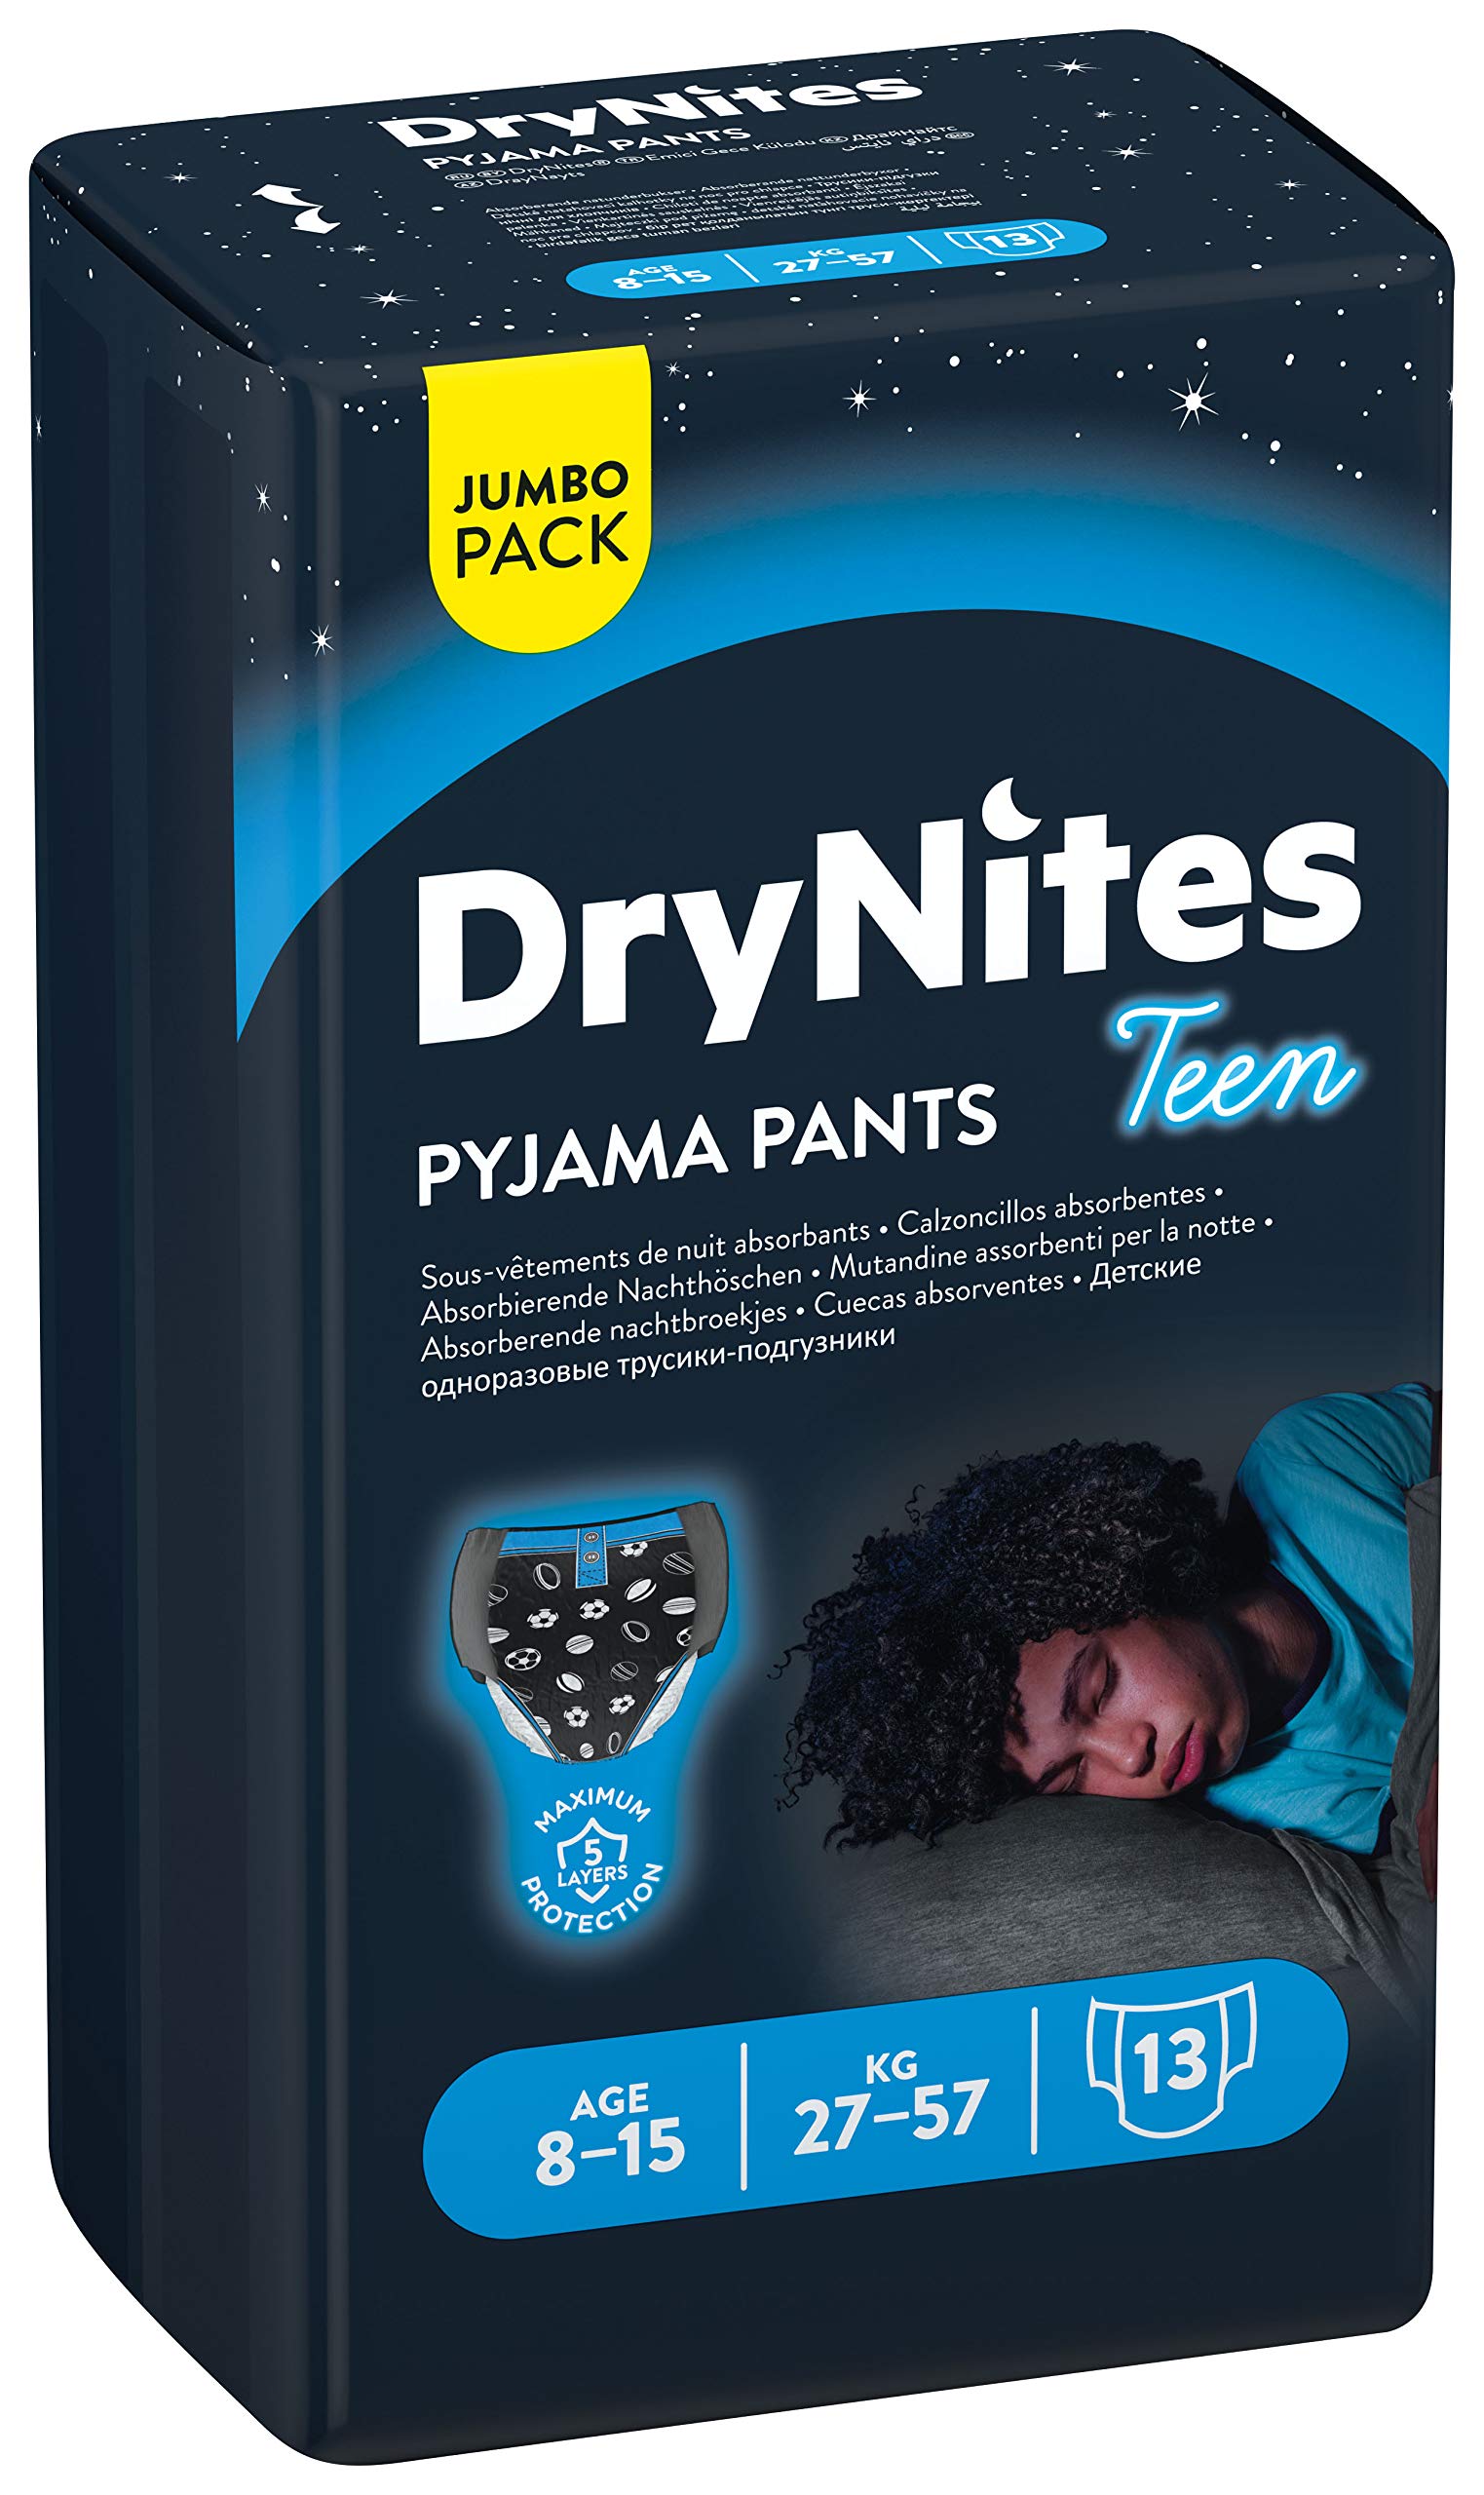 Drynites Pyjama Age 8-15y Boy 27-57kg 13pcs حفاضات دراي نايتس حجم 3، جمبو بوي - 27-57 كغم، 13 قطعة